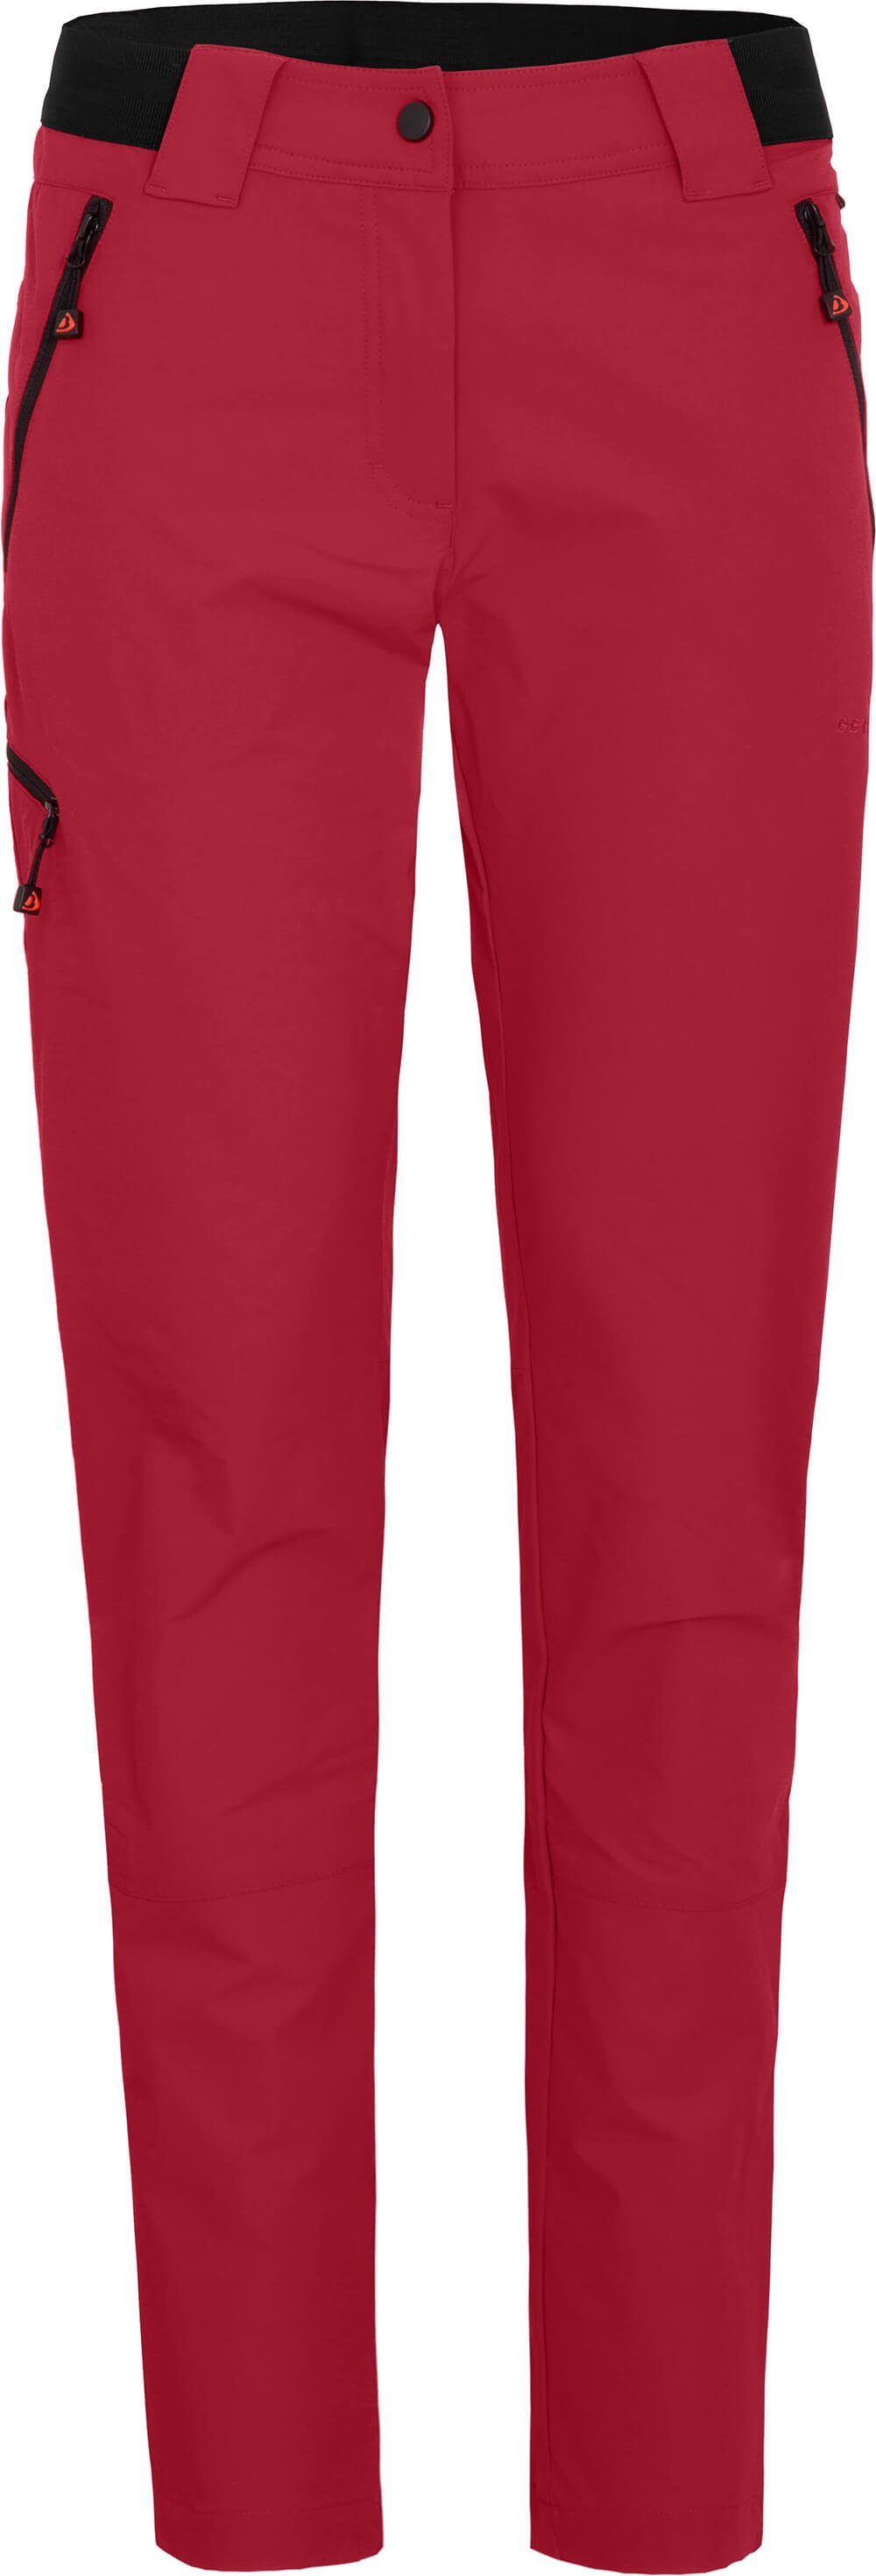 Damen (slim) Bergson COMFORT Wanderhose, Outdoorhose leicht, VIDAA Normalgrößen, strapazierfähig, rot